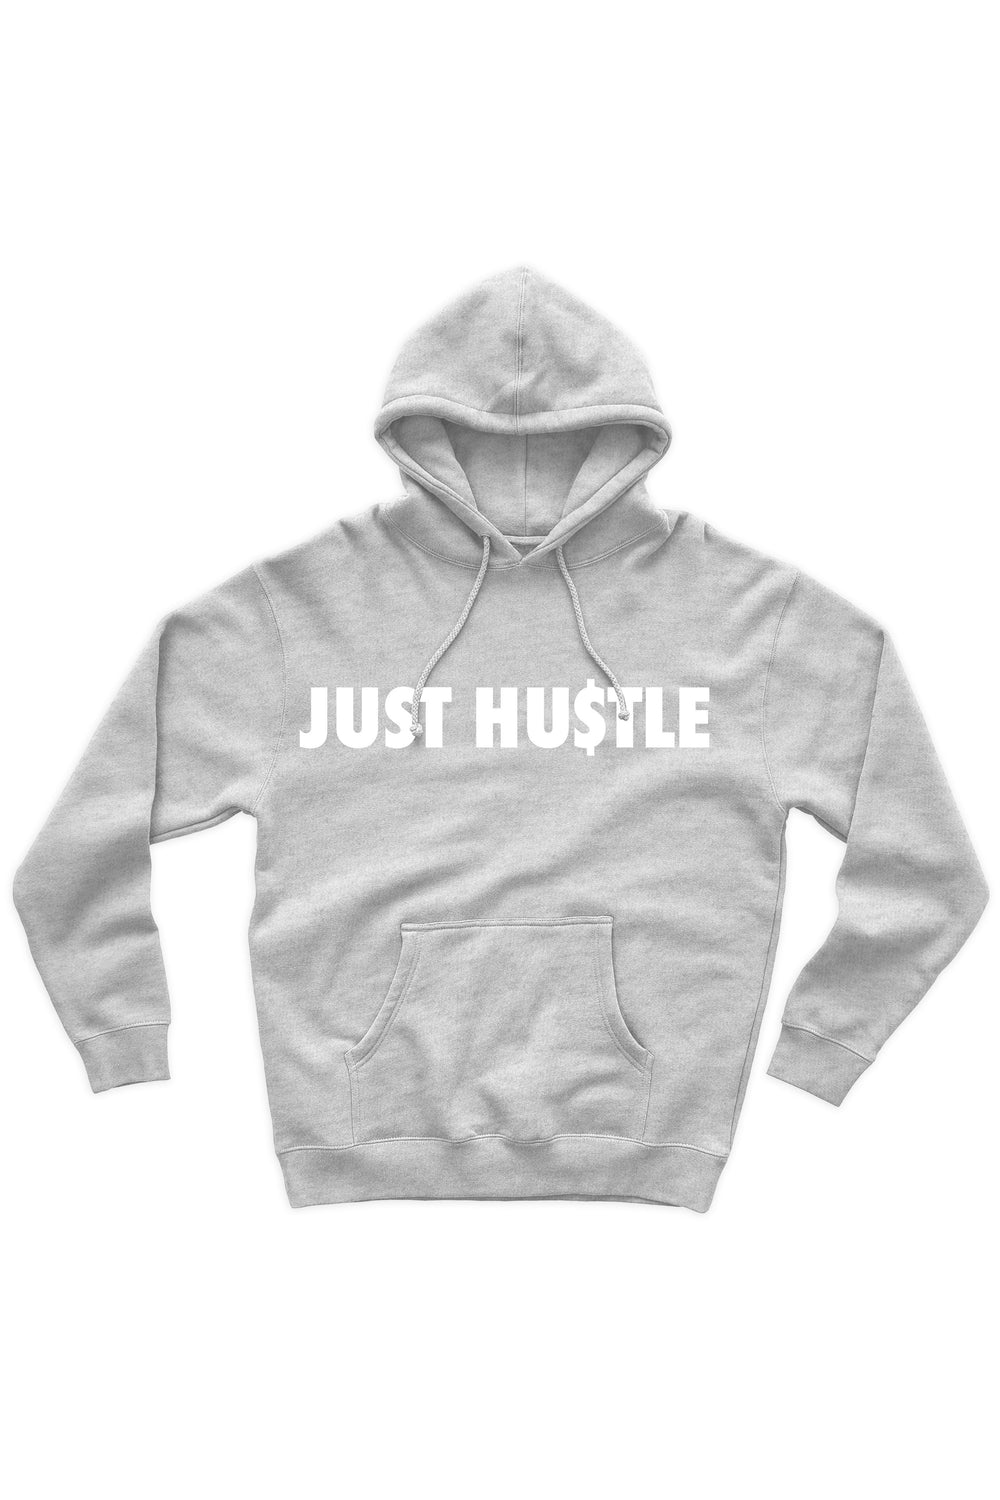 Just Hu$tle Hoodie (White Logo) - Zamage